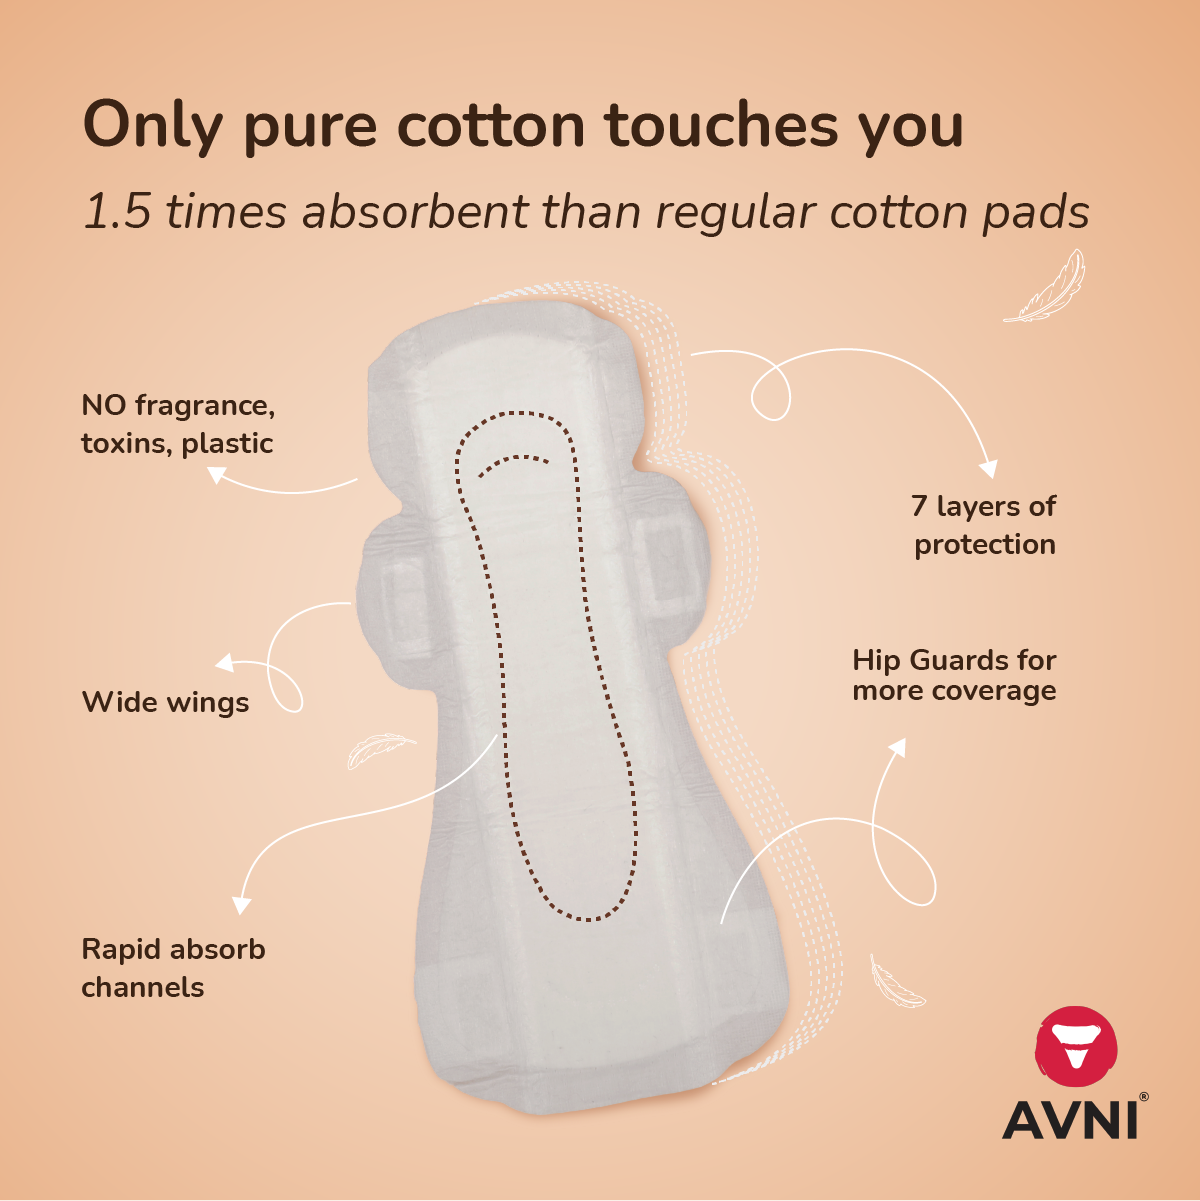 Natural Cotton Sanitary Pads - Set Pack of 12 Pads